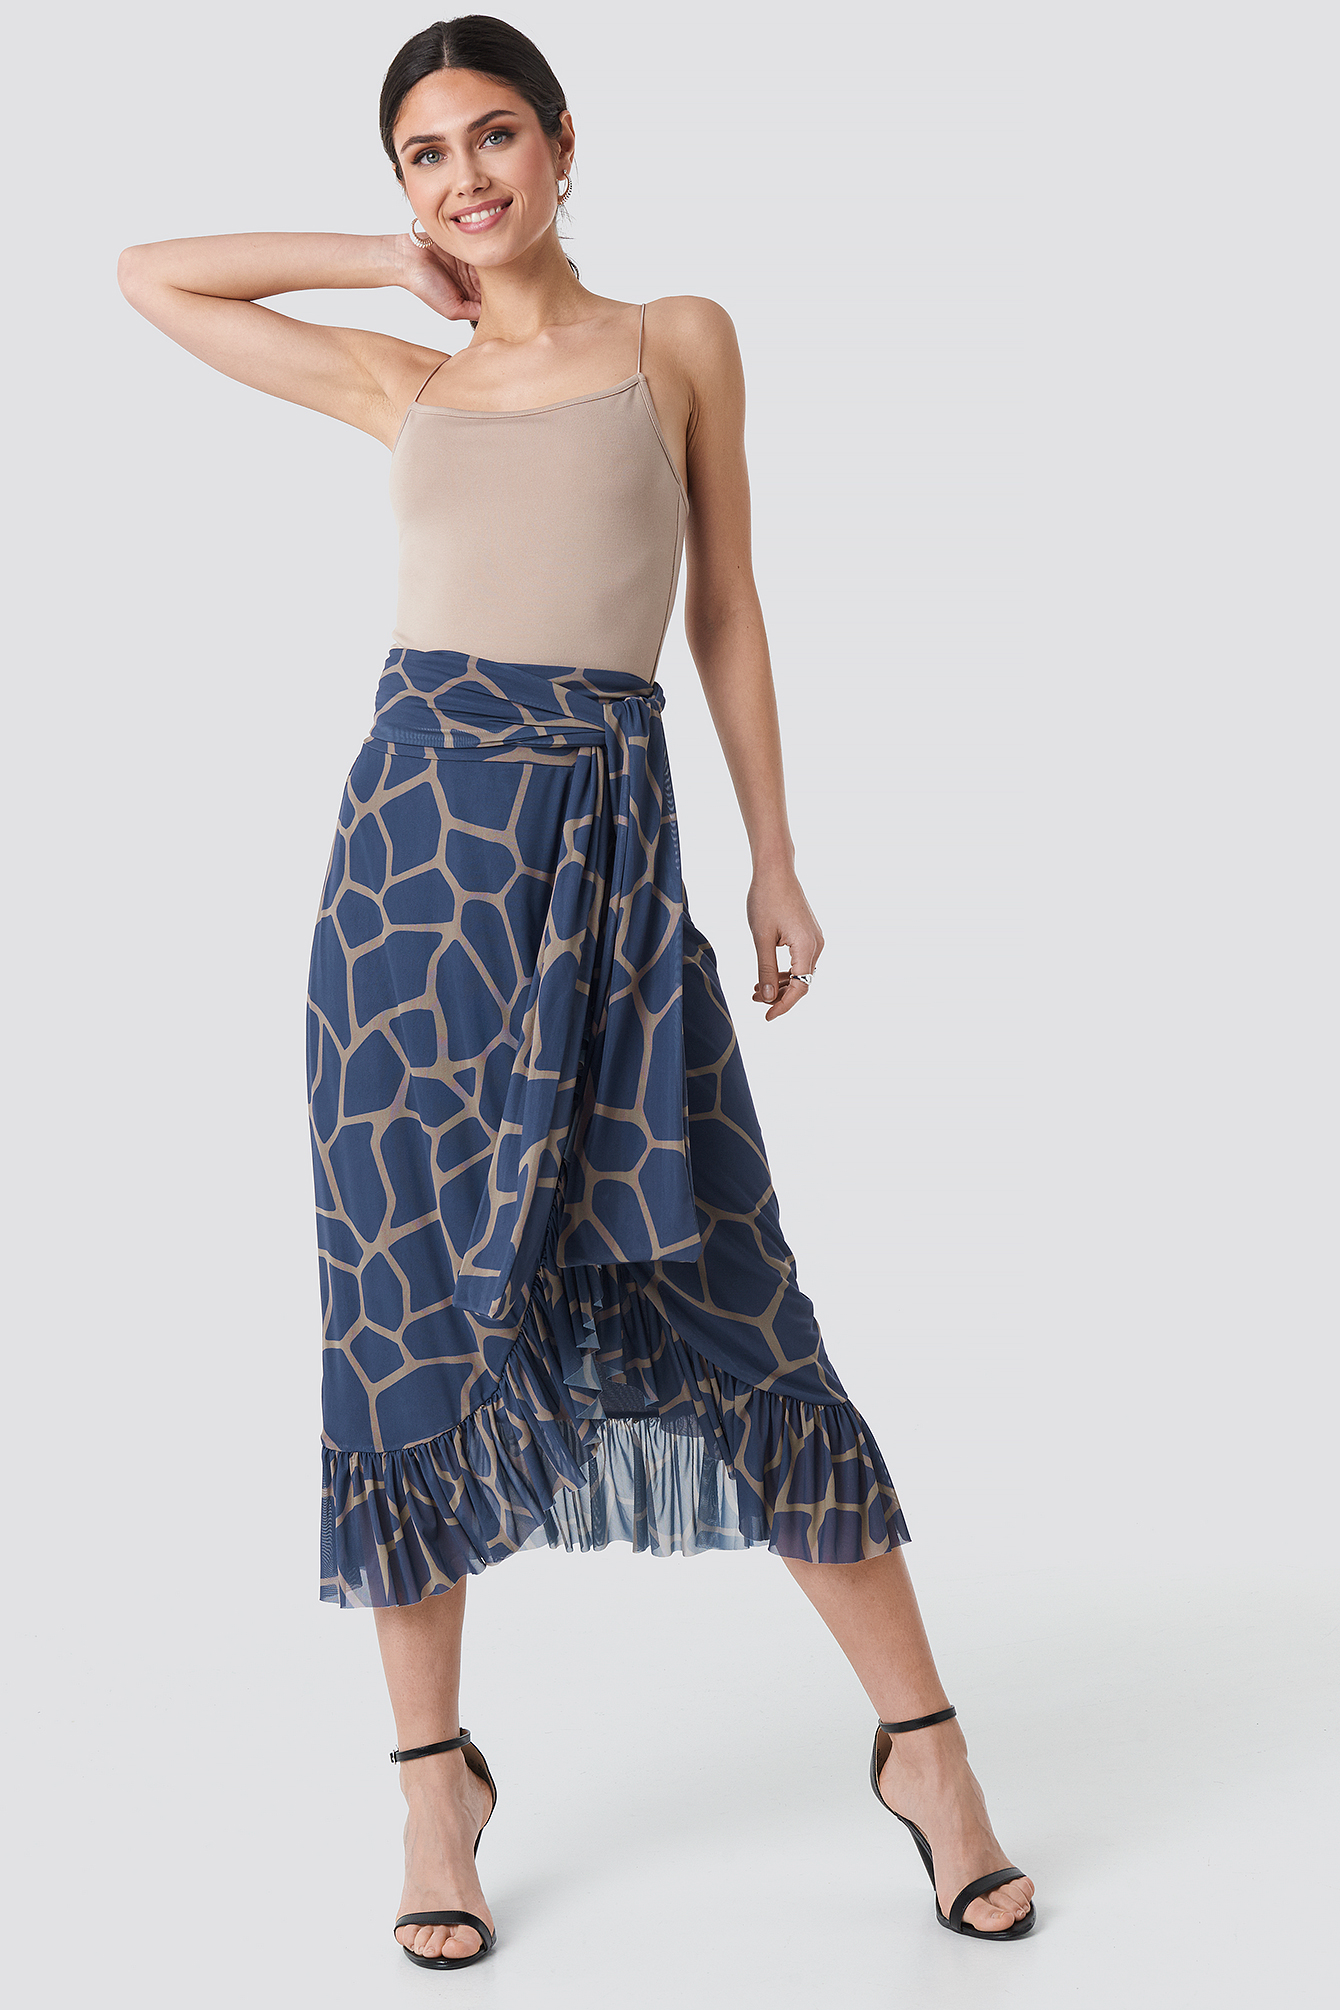 Geometric Blue Print NA-KD Trend Mesh Tied Waist Ankle Skirt